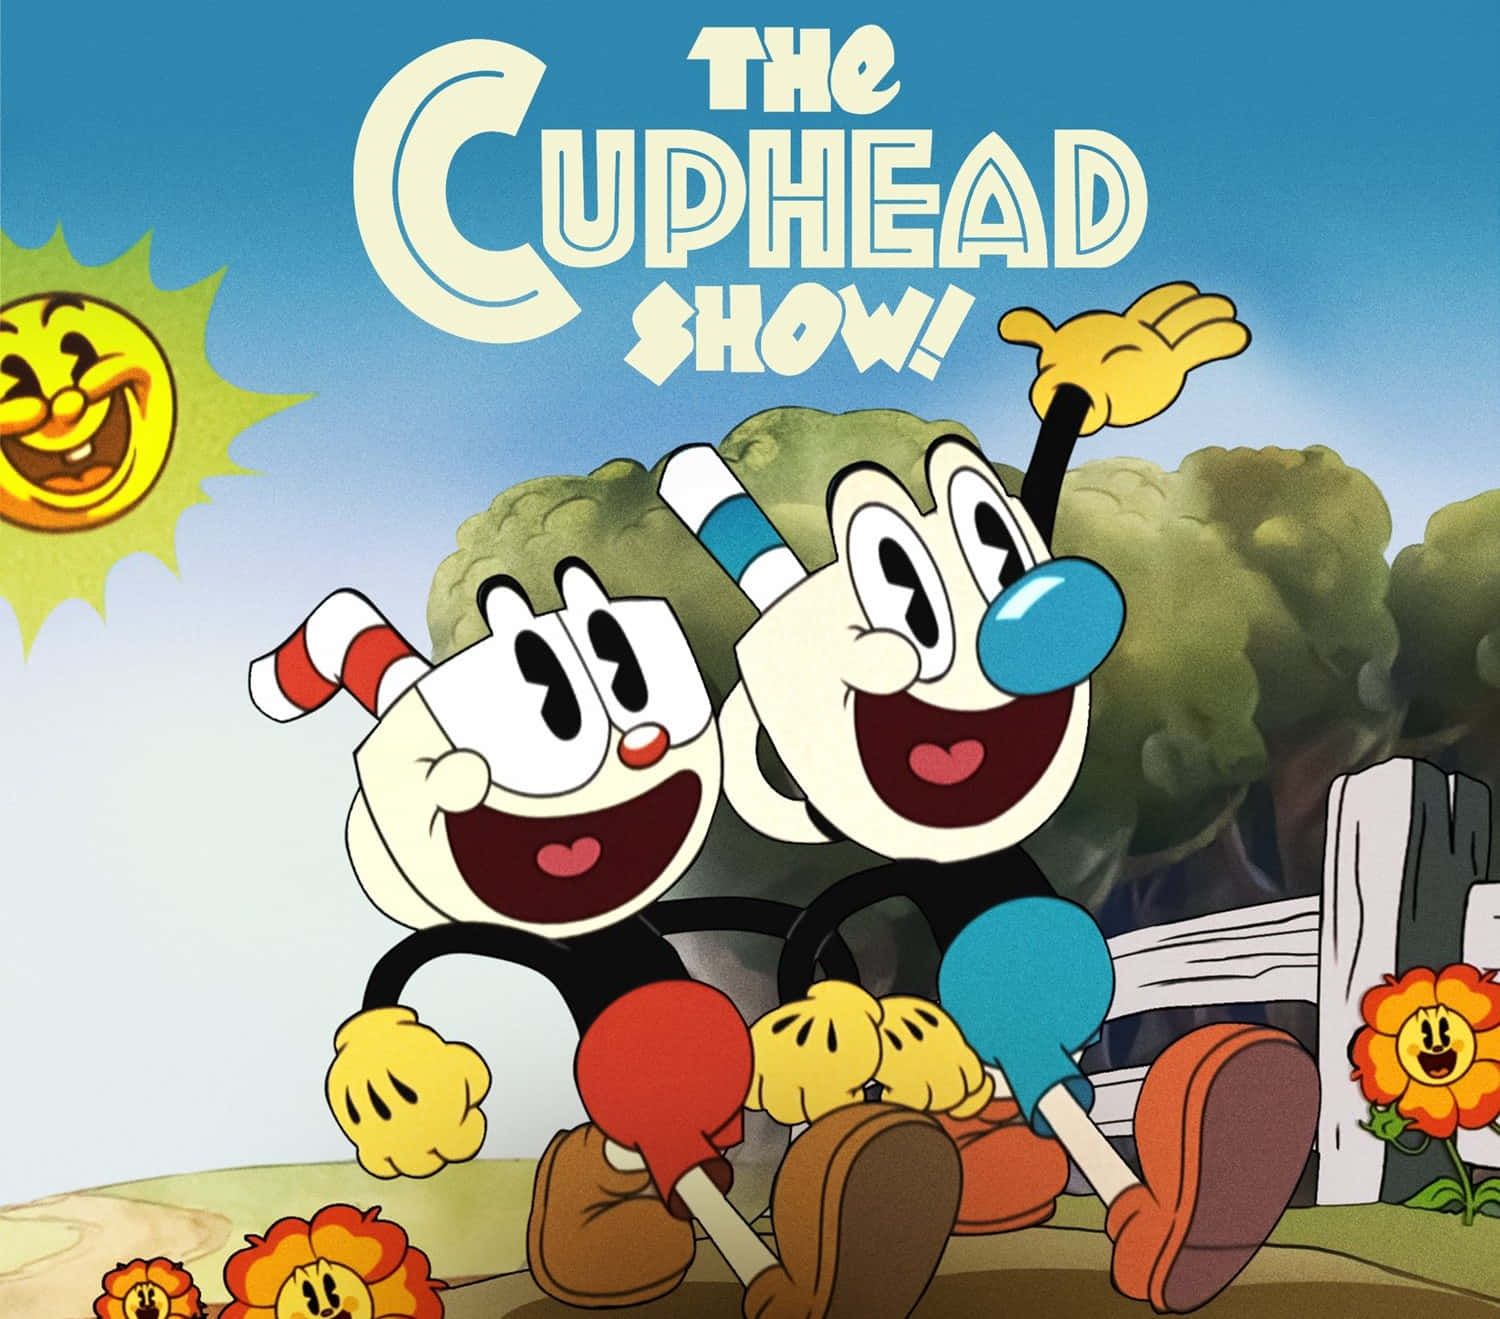 Cuphead - the Challenge Awaits!